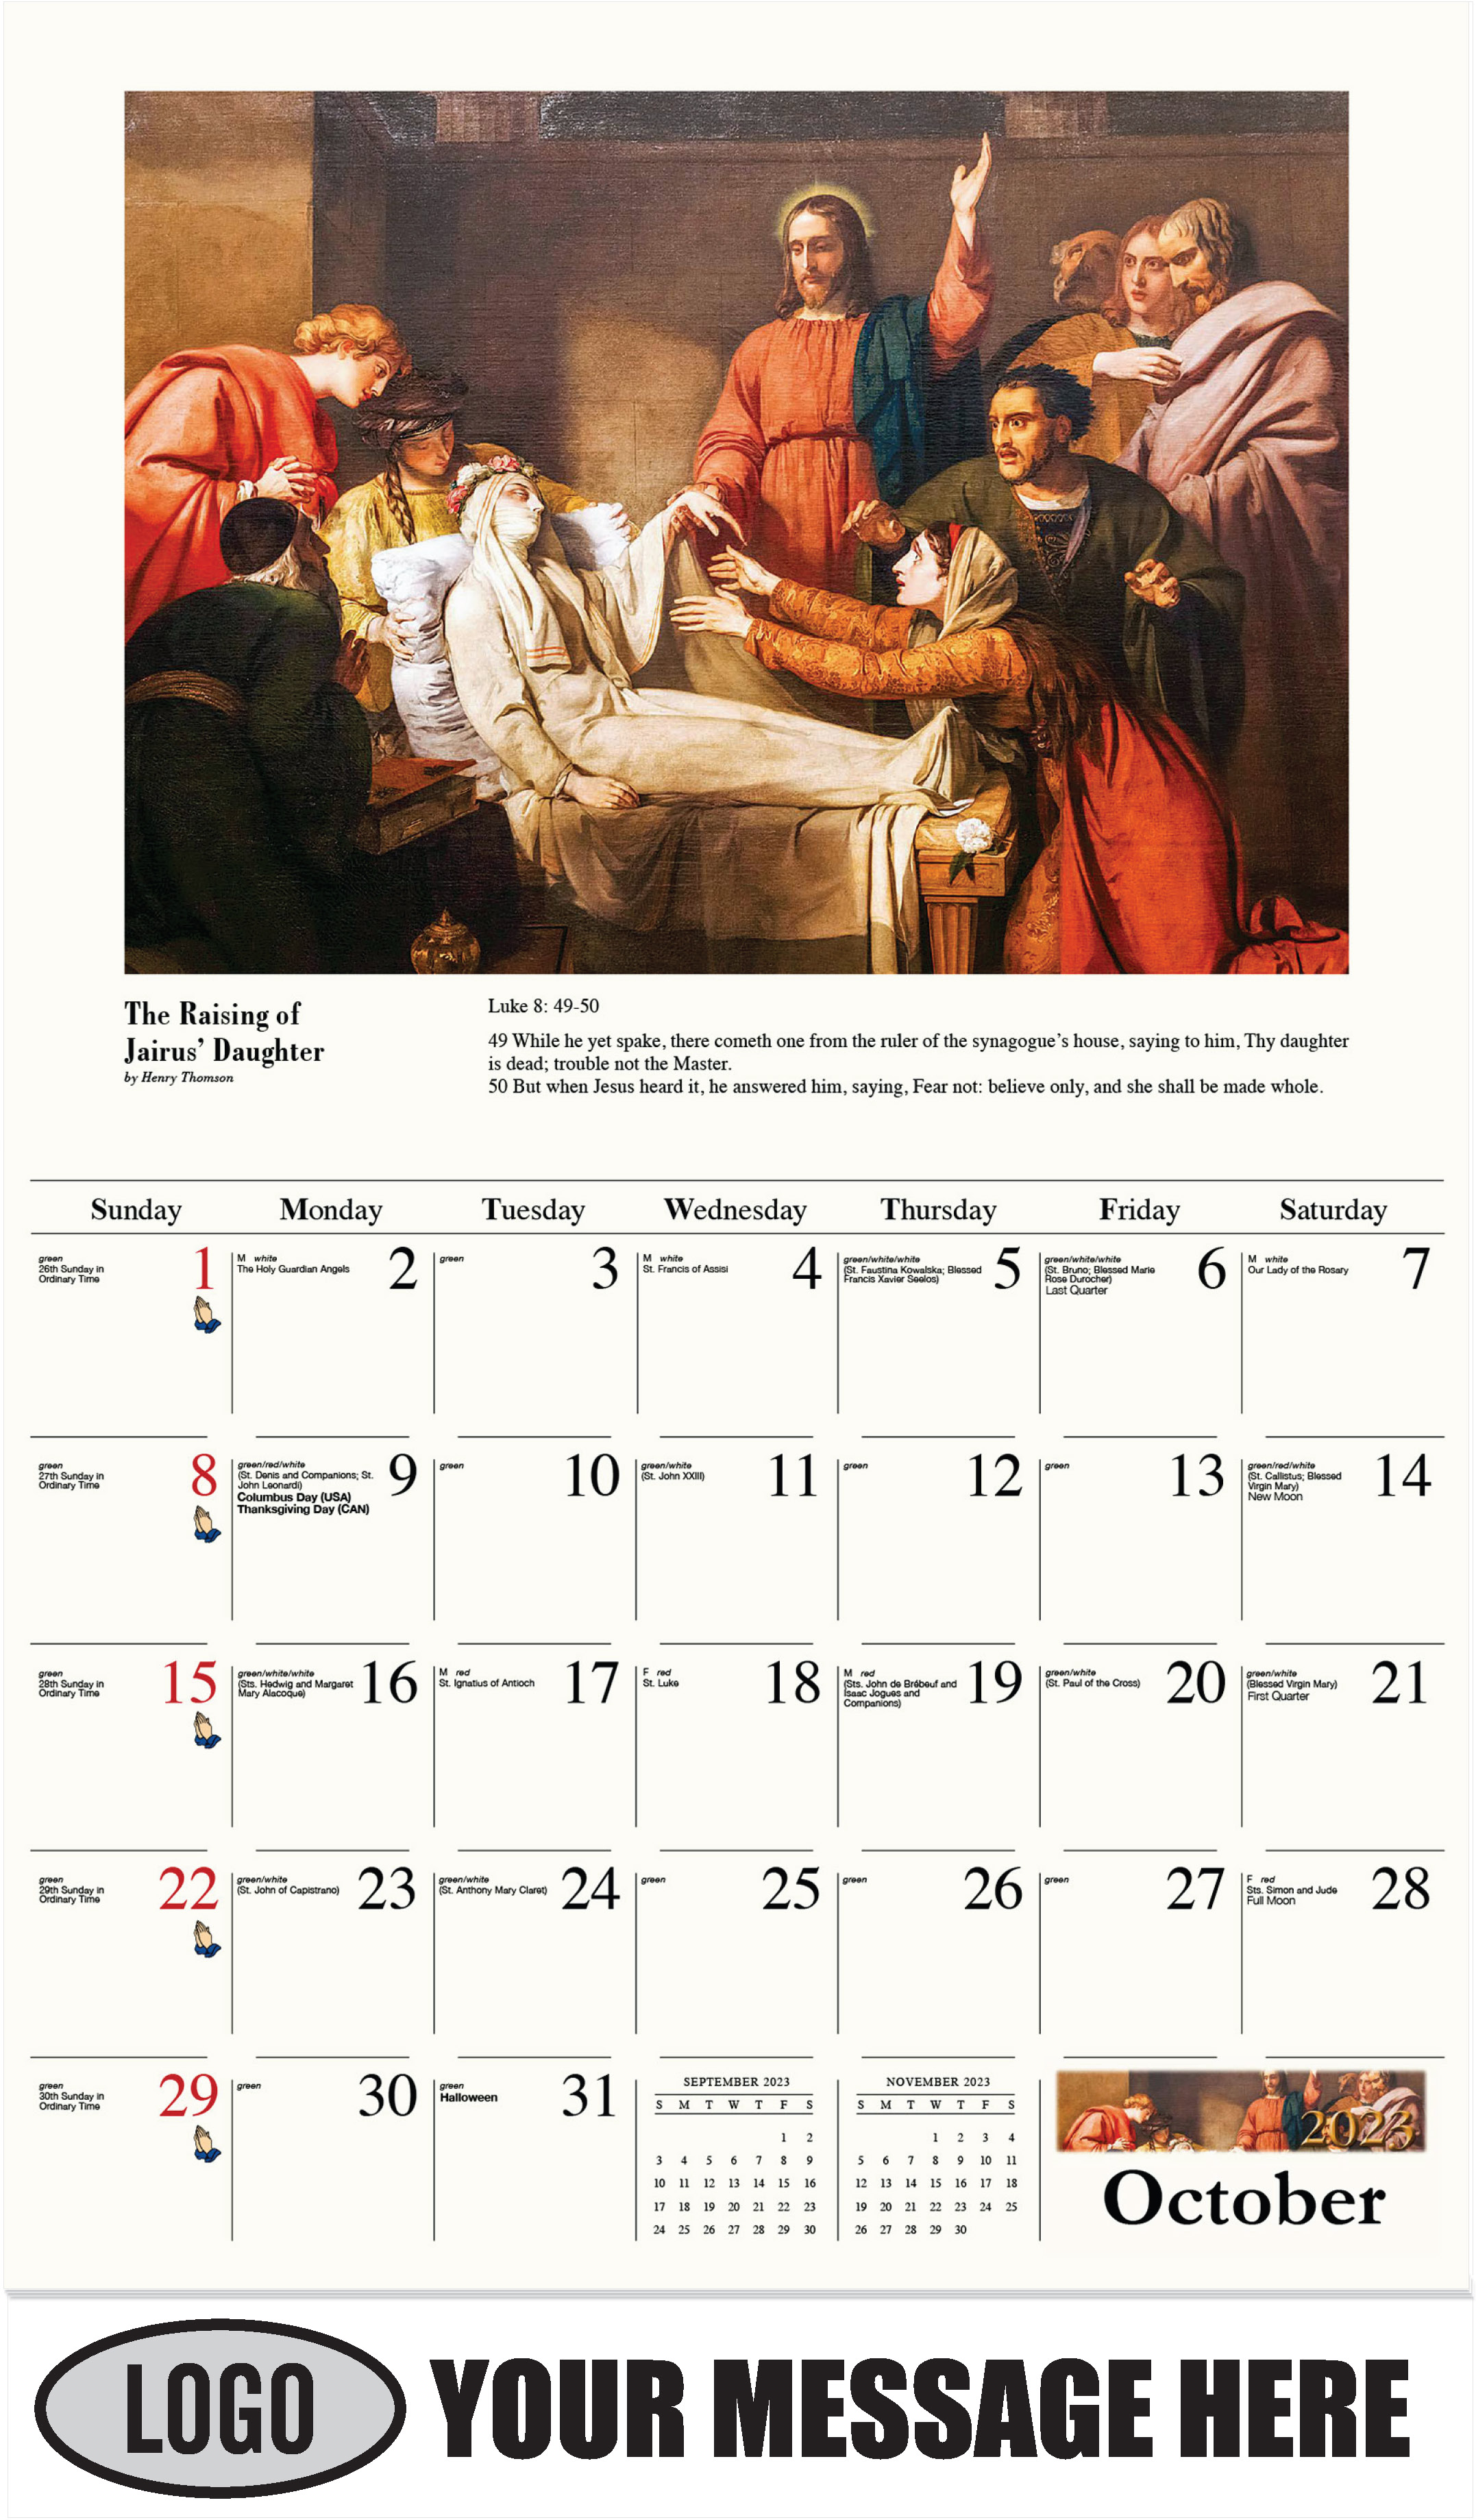 October - Catholic Inspiration 2023 Promotional Calendar